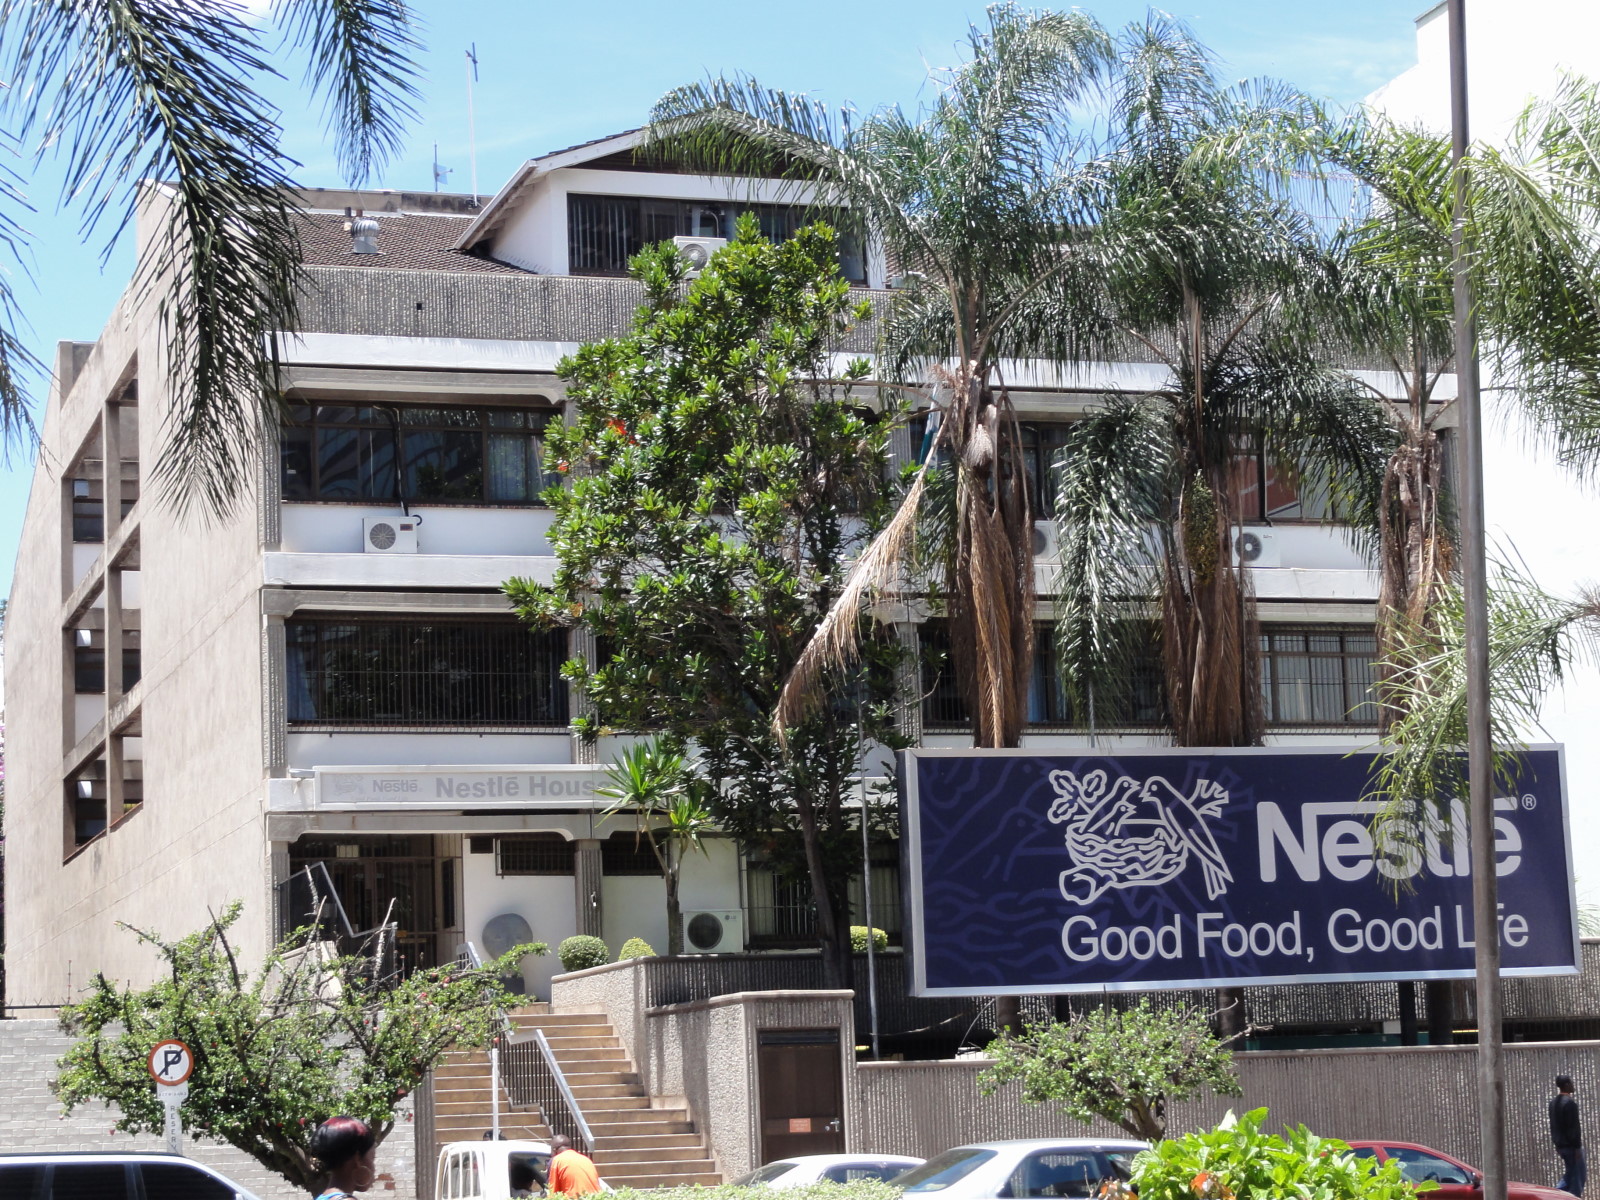 Nestlé Zimbabwe fosters Agripreneurship